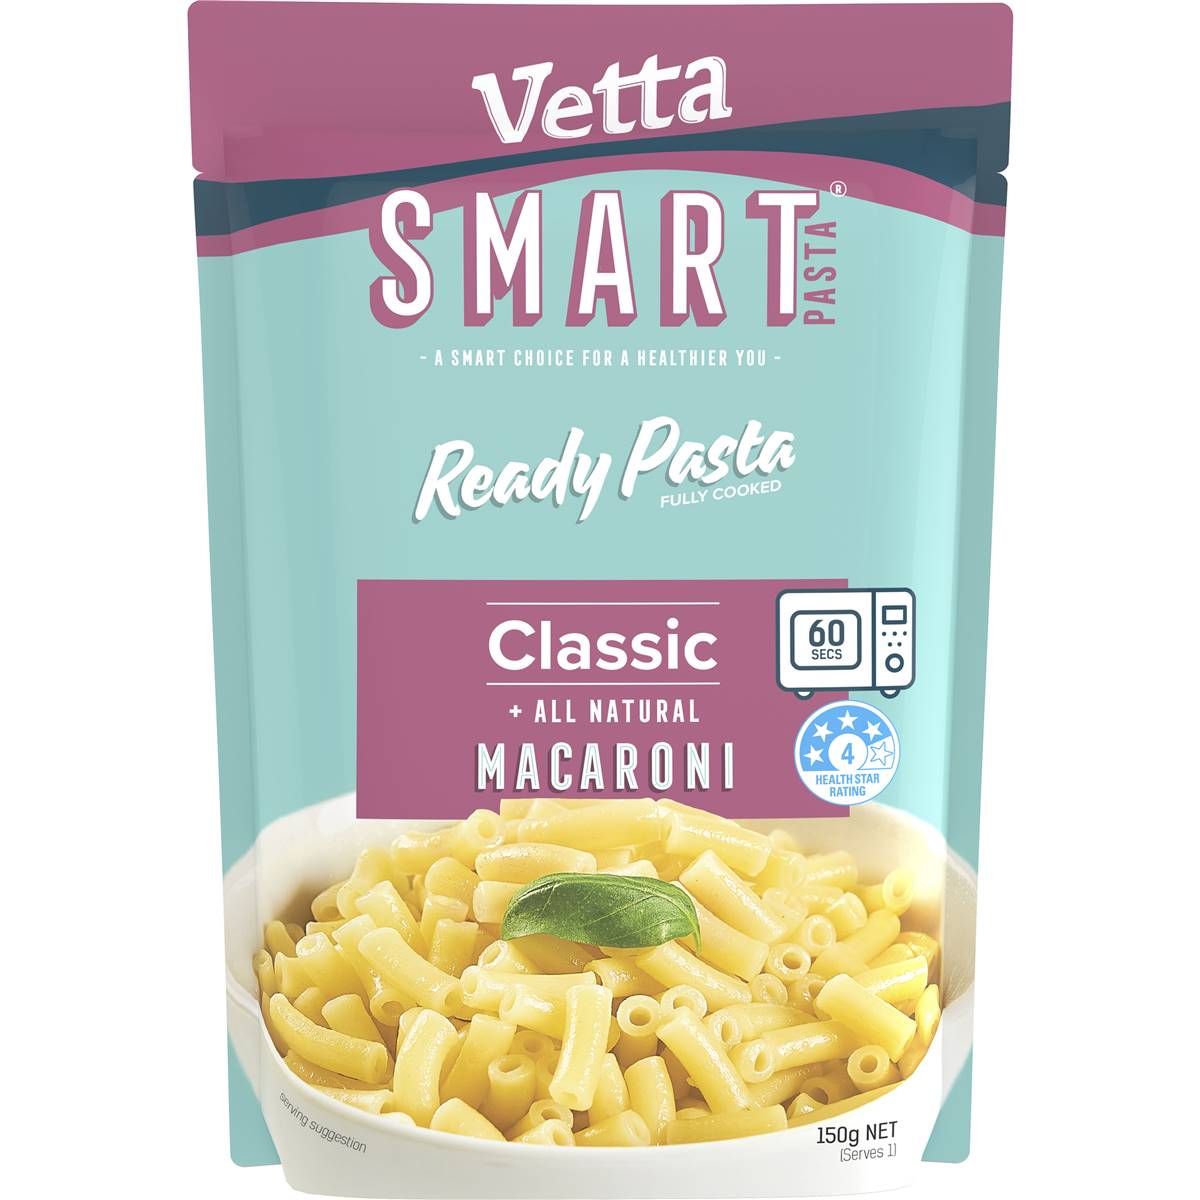 Calories in Vetta Microwave Ready Pasta Classic Macaroni